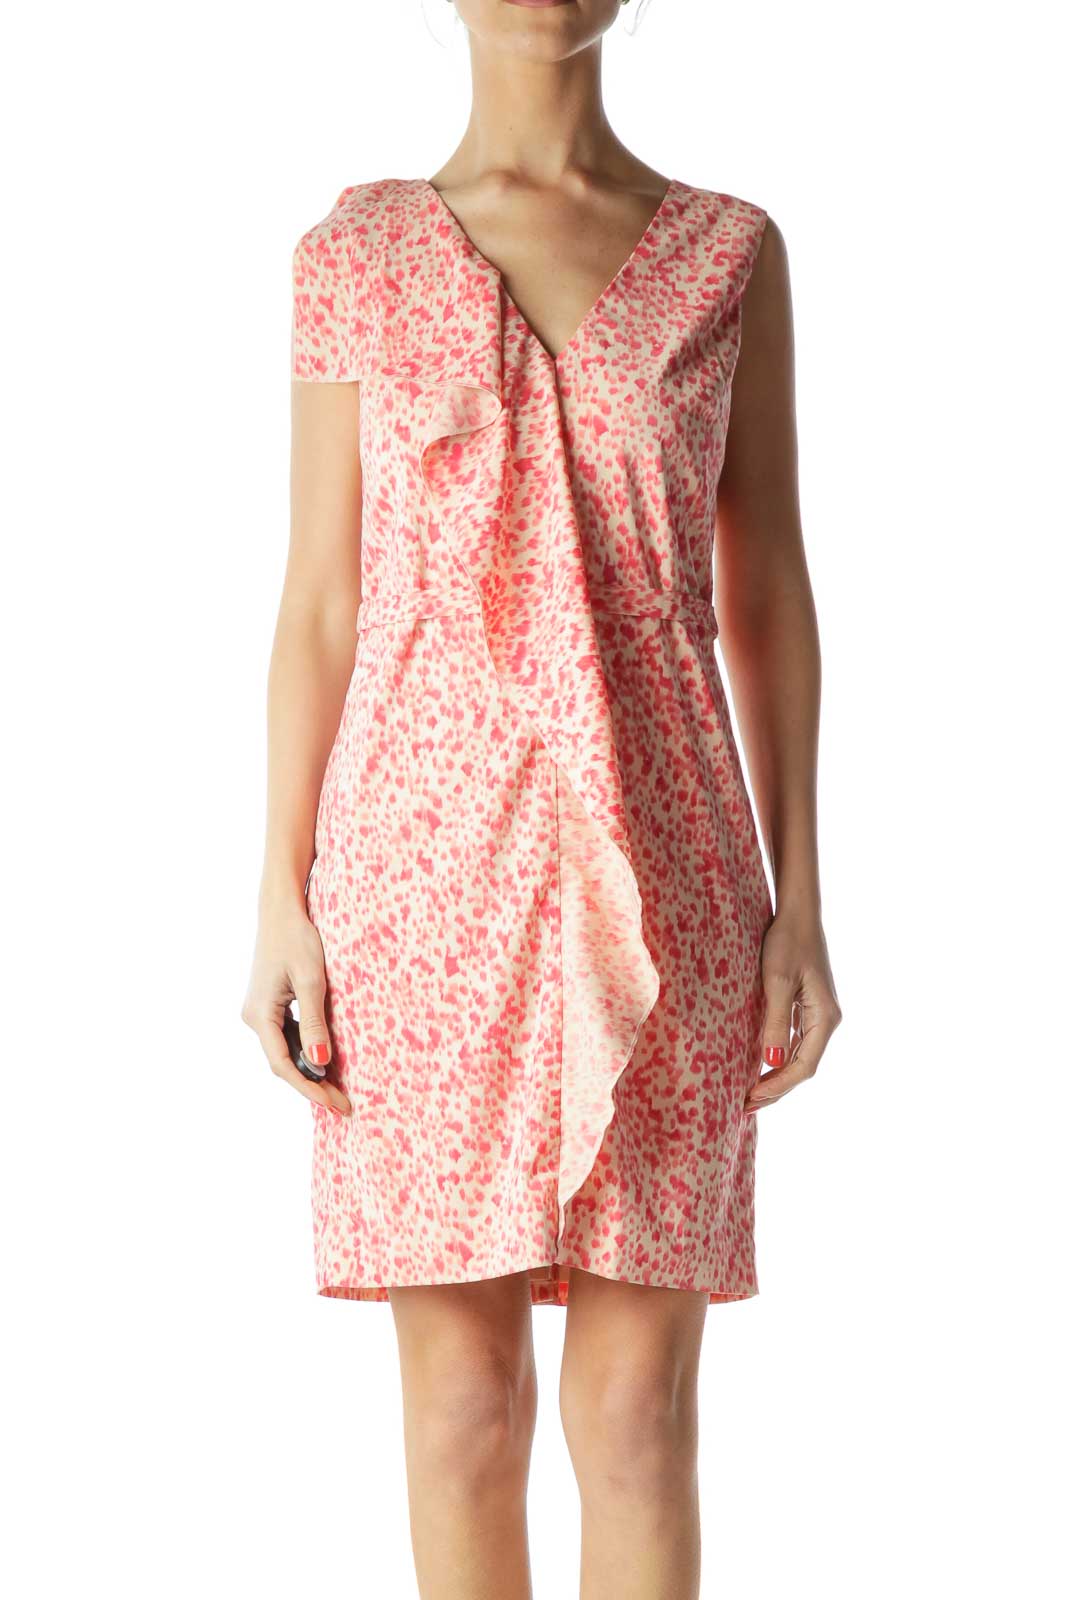 Beige Pink Ruffle & Print Work Dress Front